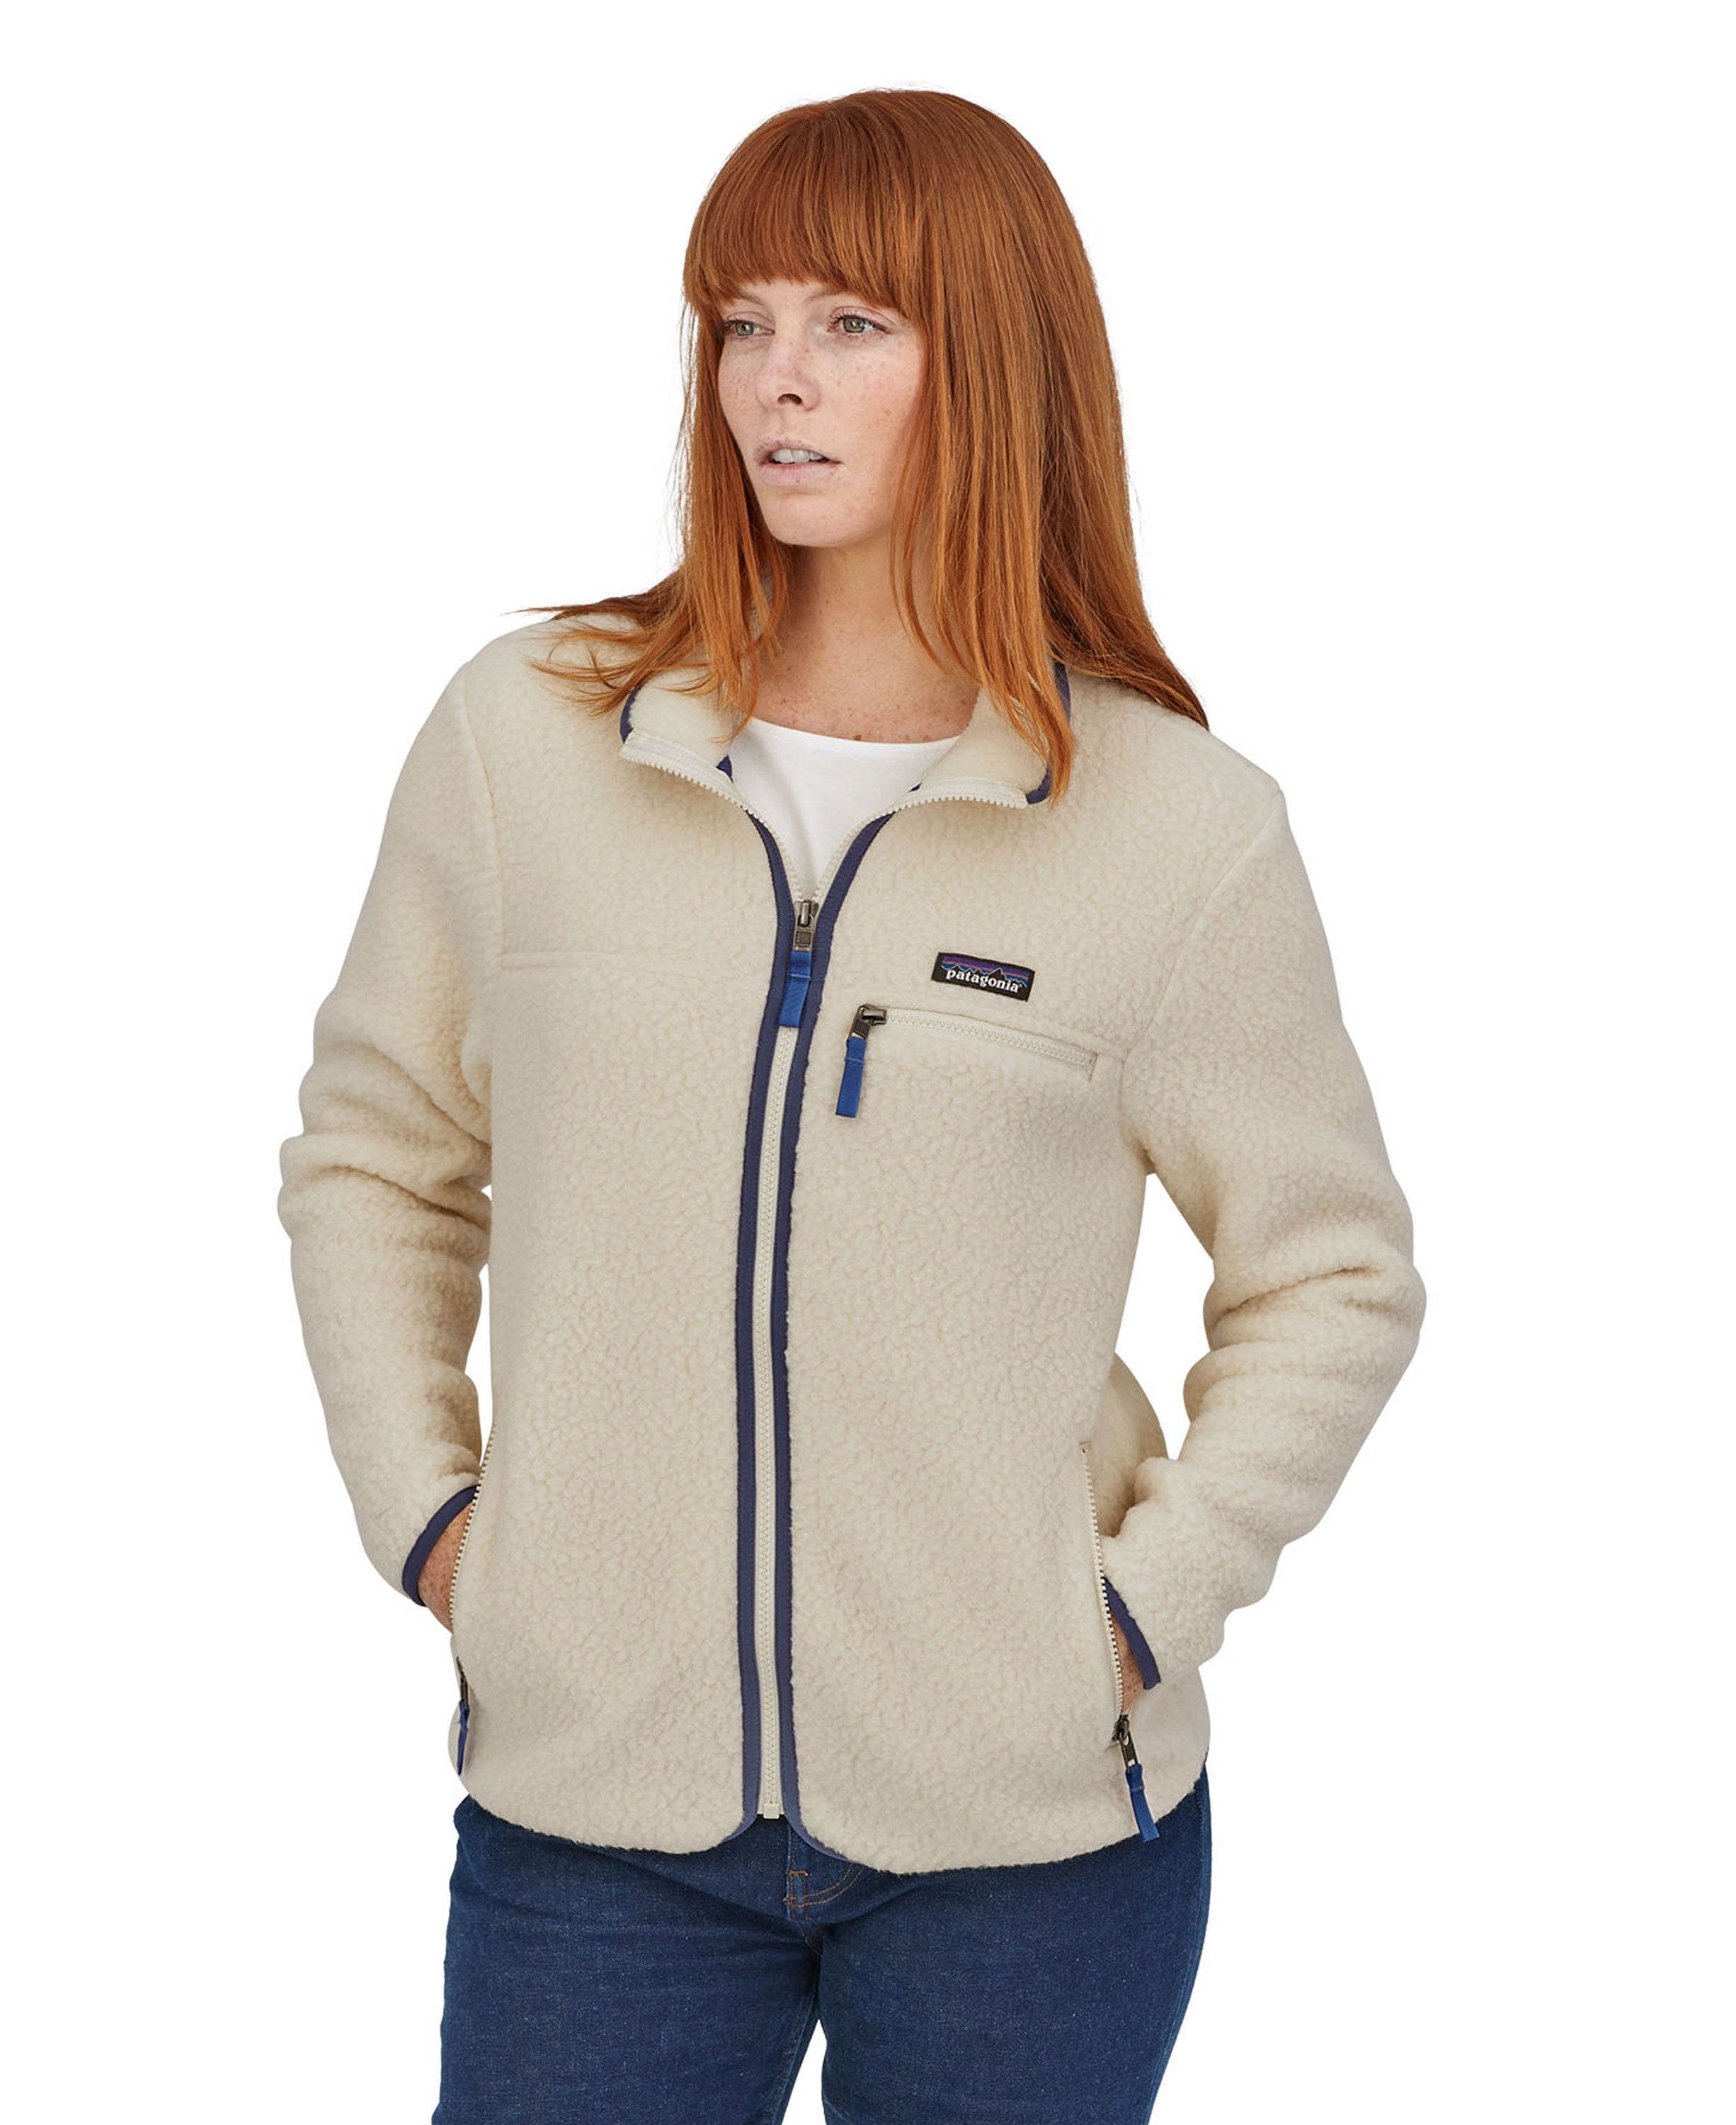 Retro Pile Fleece Jacket - Natural